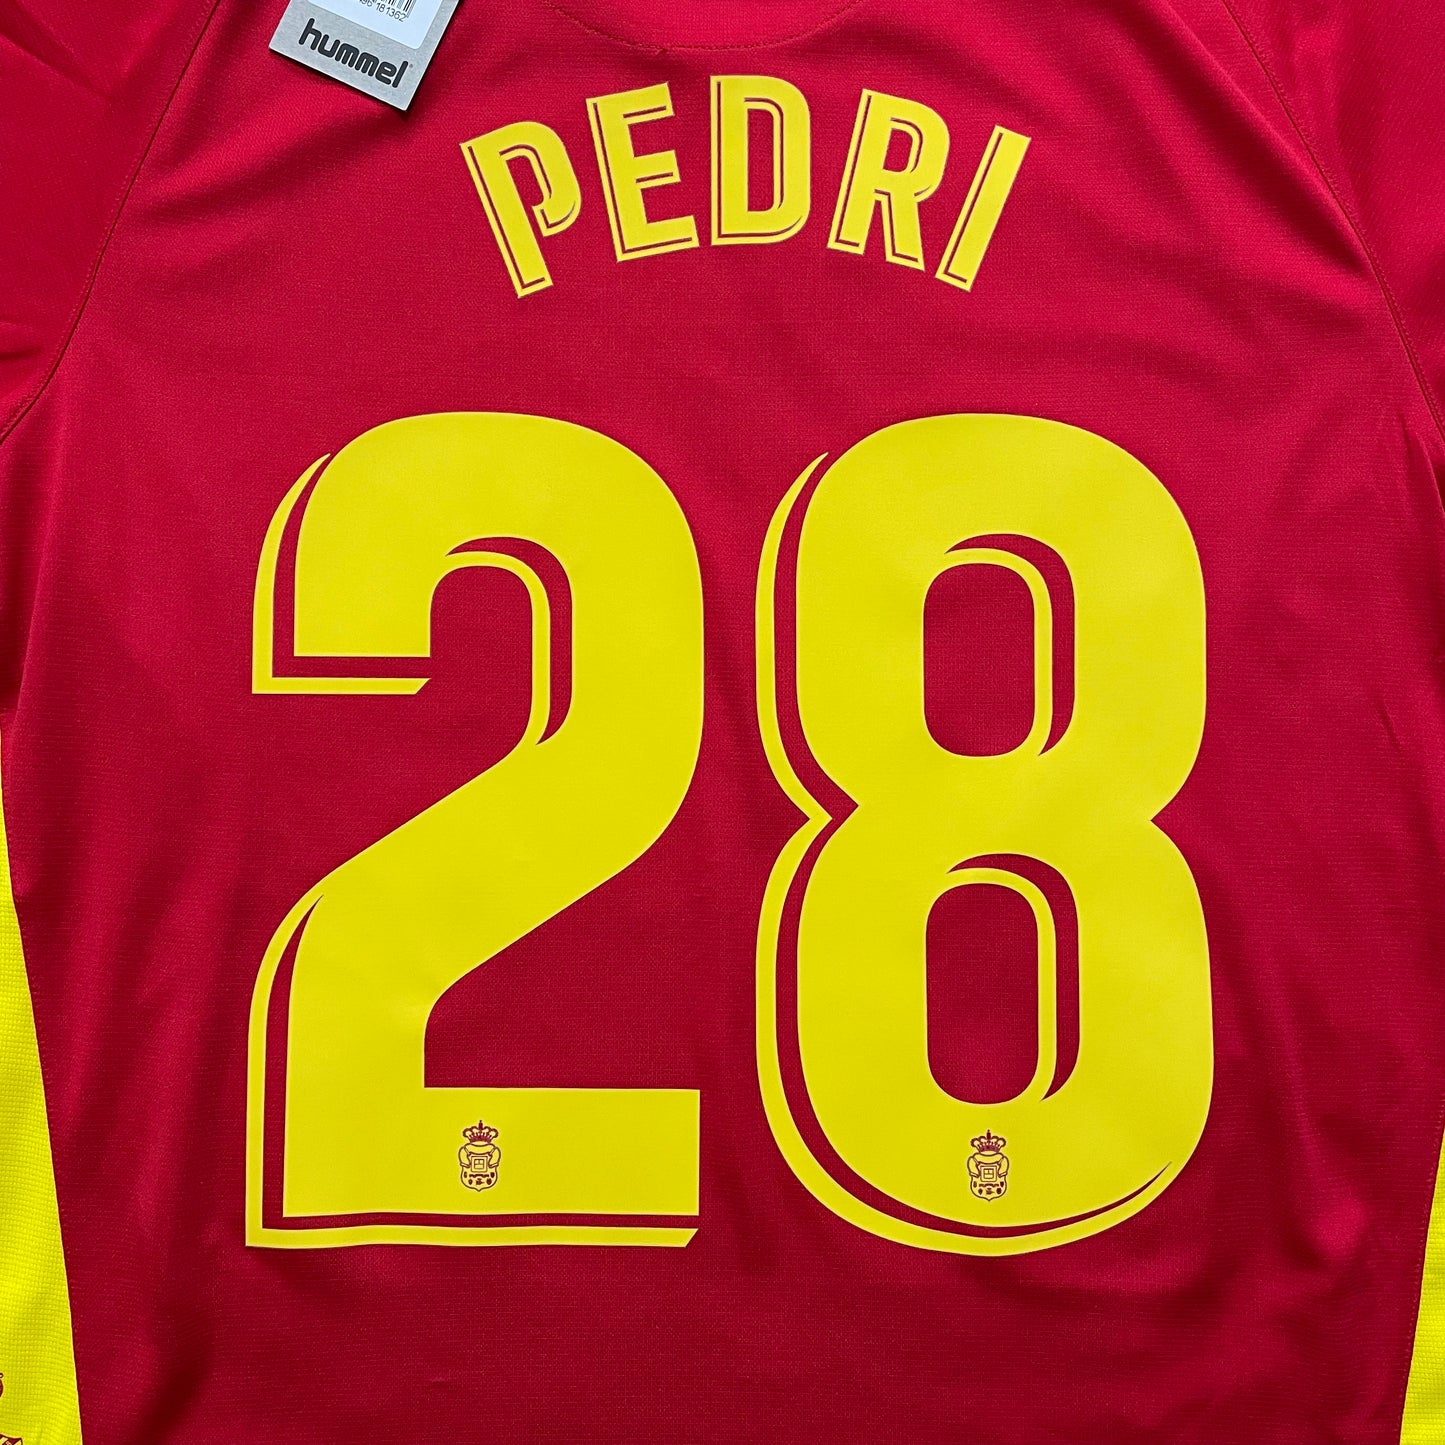 <tc>2019-2020 Las Palmas camiseta visitante #28 Pedri (XL)</tc>